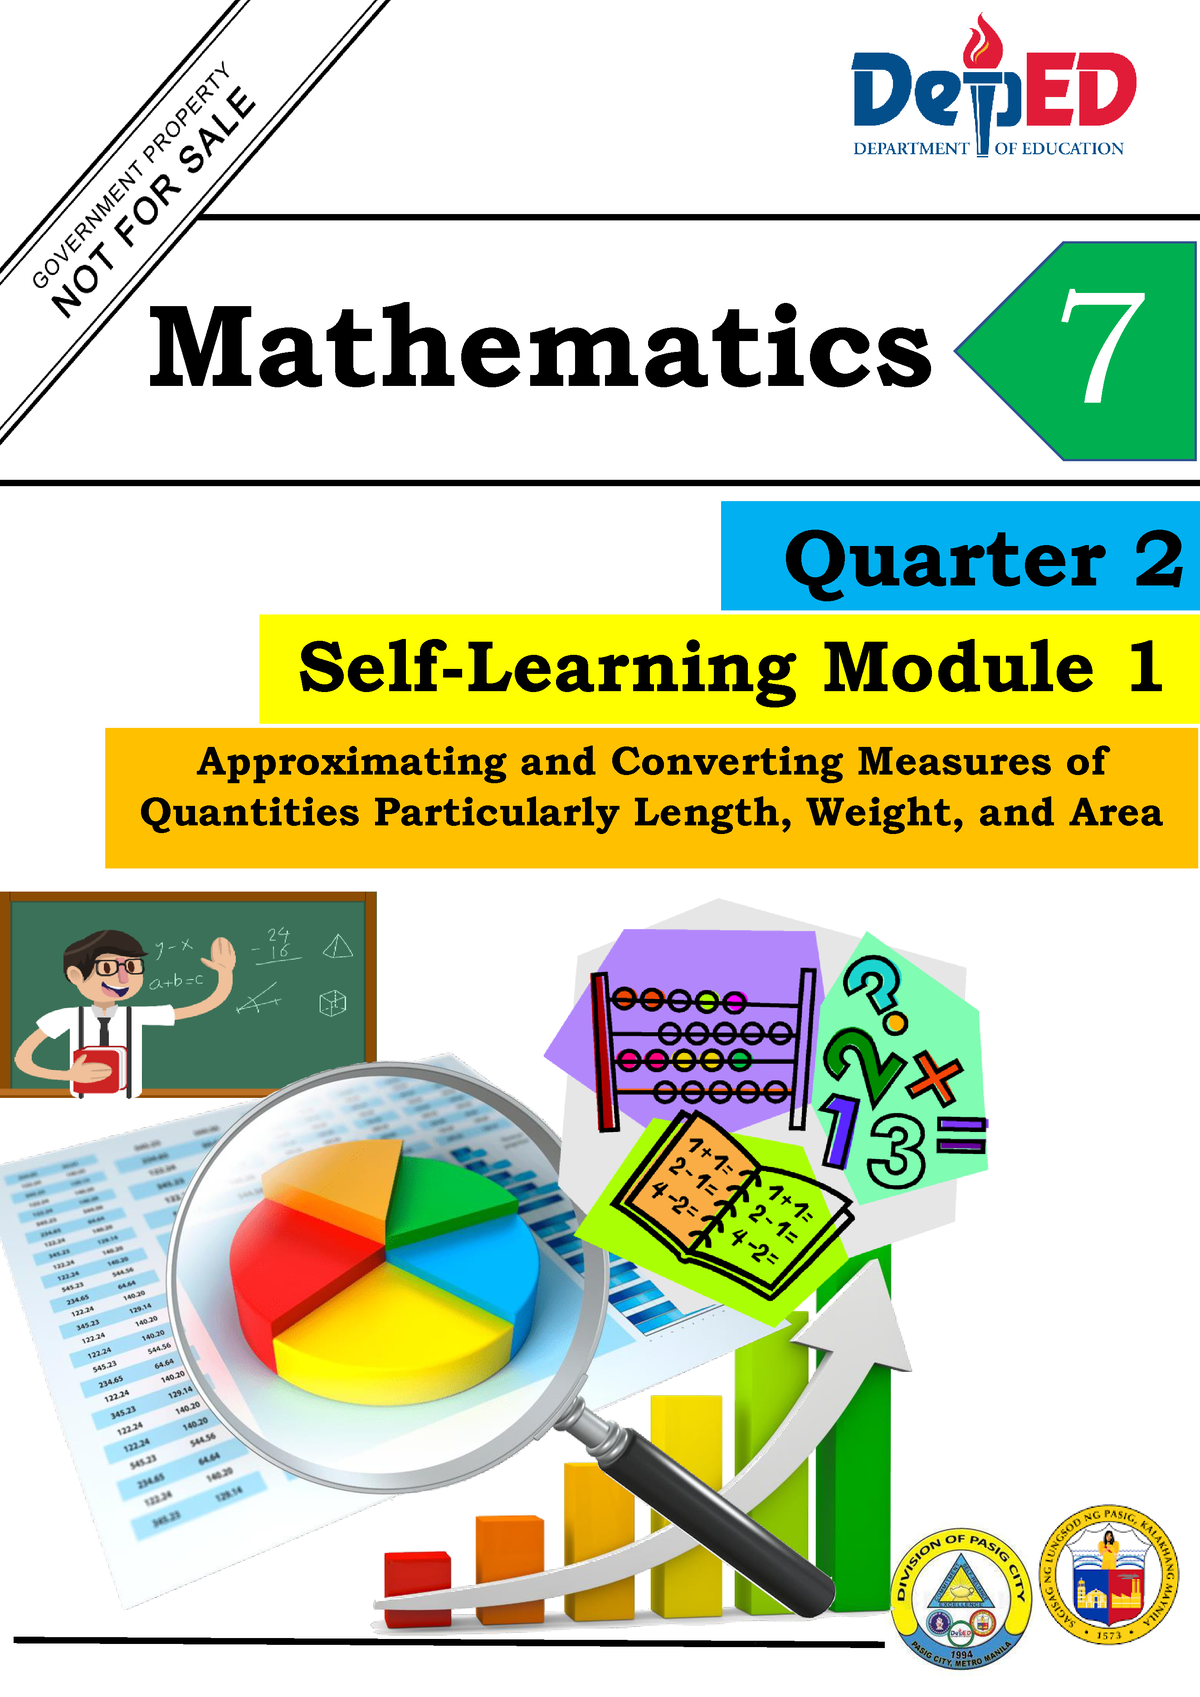 math-7-q2-module-1-second-quarter-7-mathematics-quarter-2-self